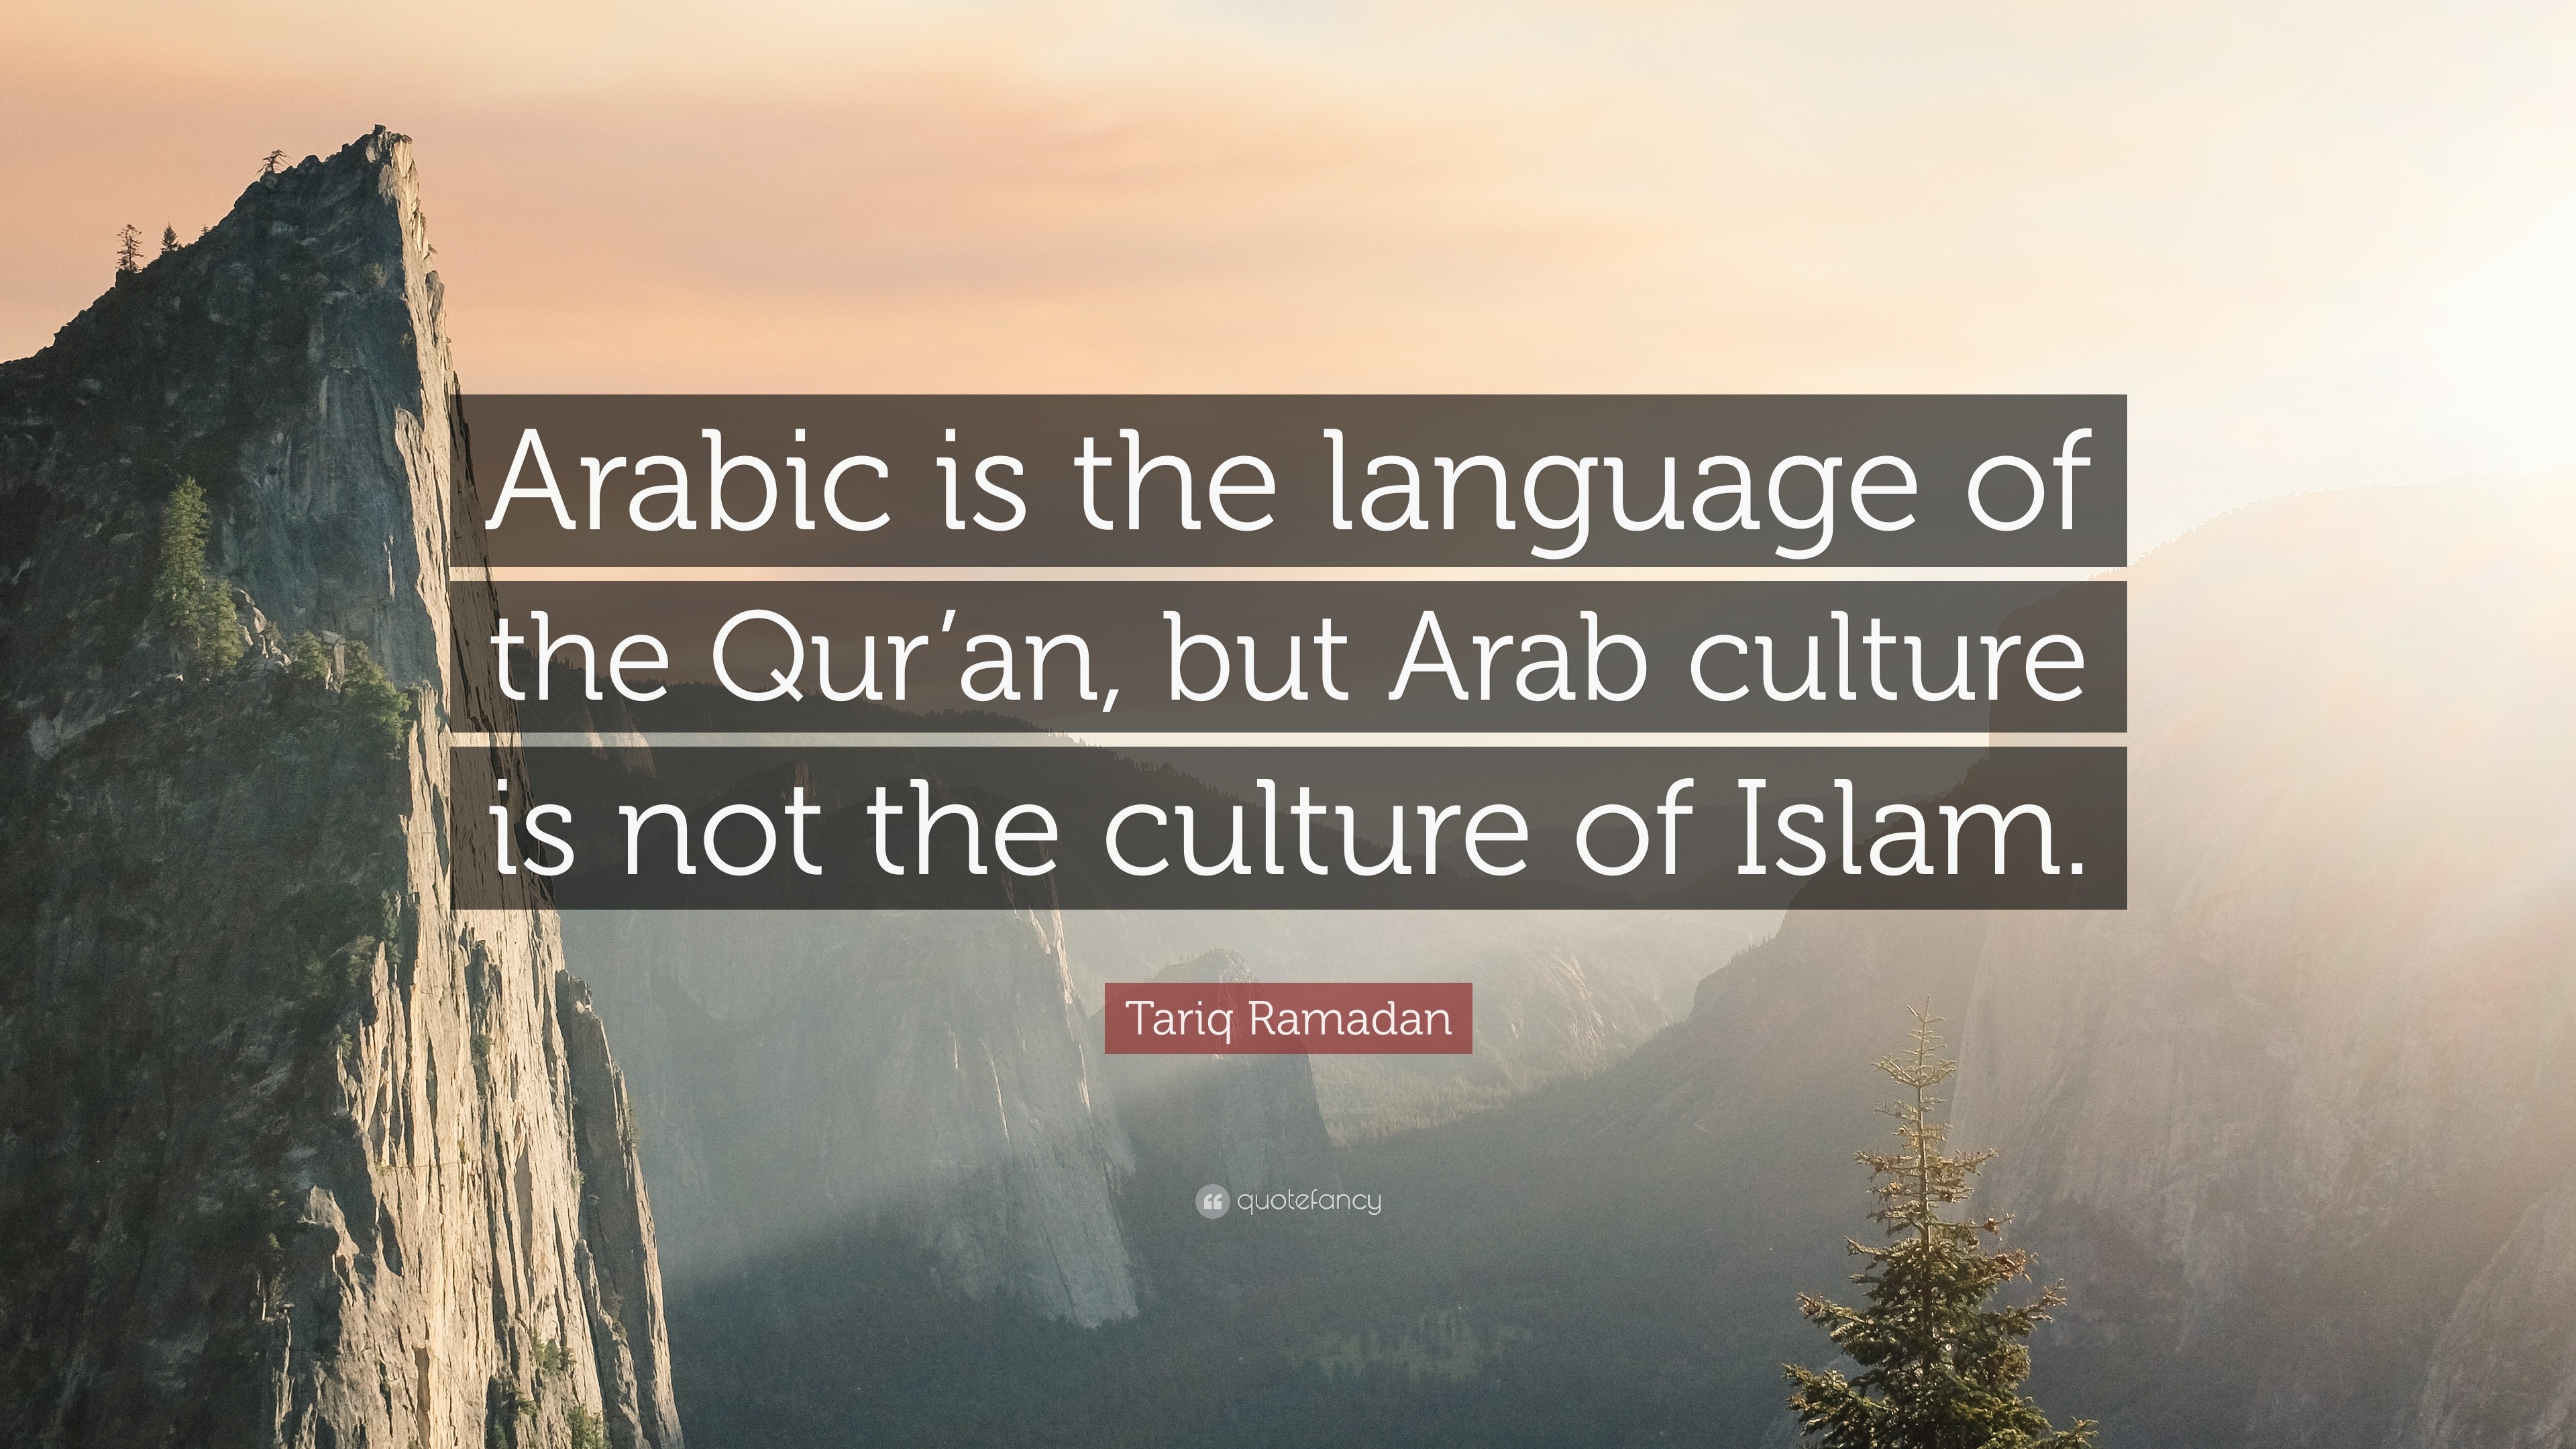 Tariq Ramadan Quote “Arabic is the language of the Qur’an